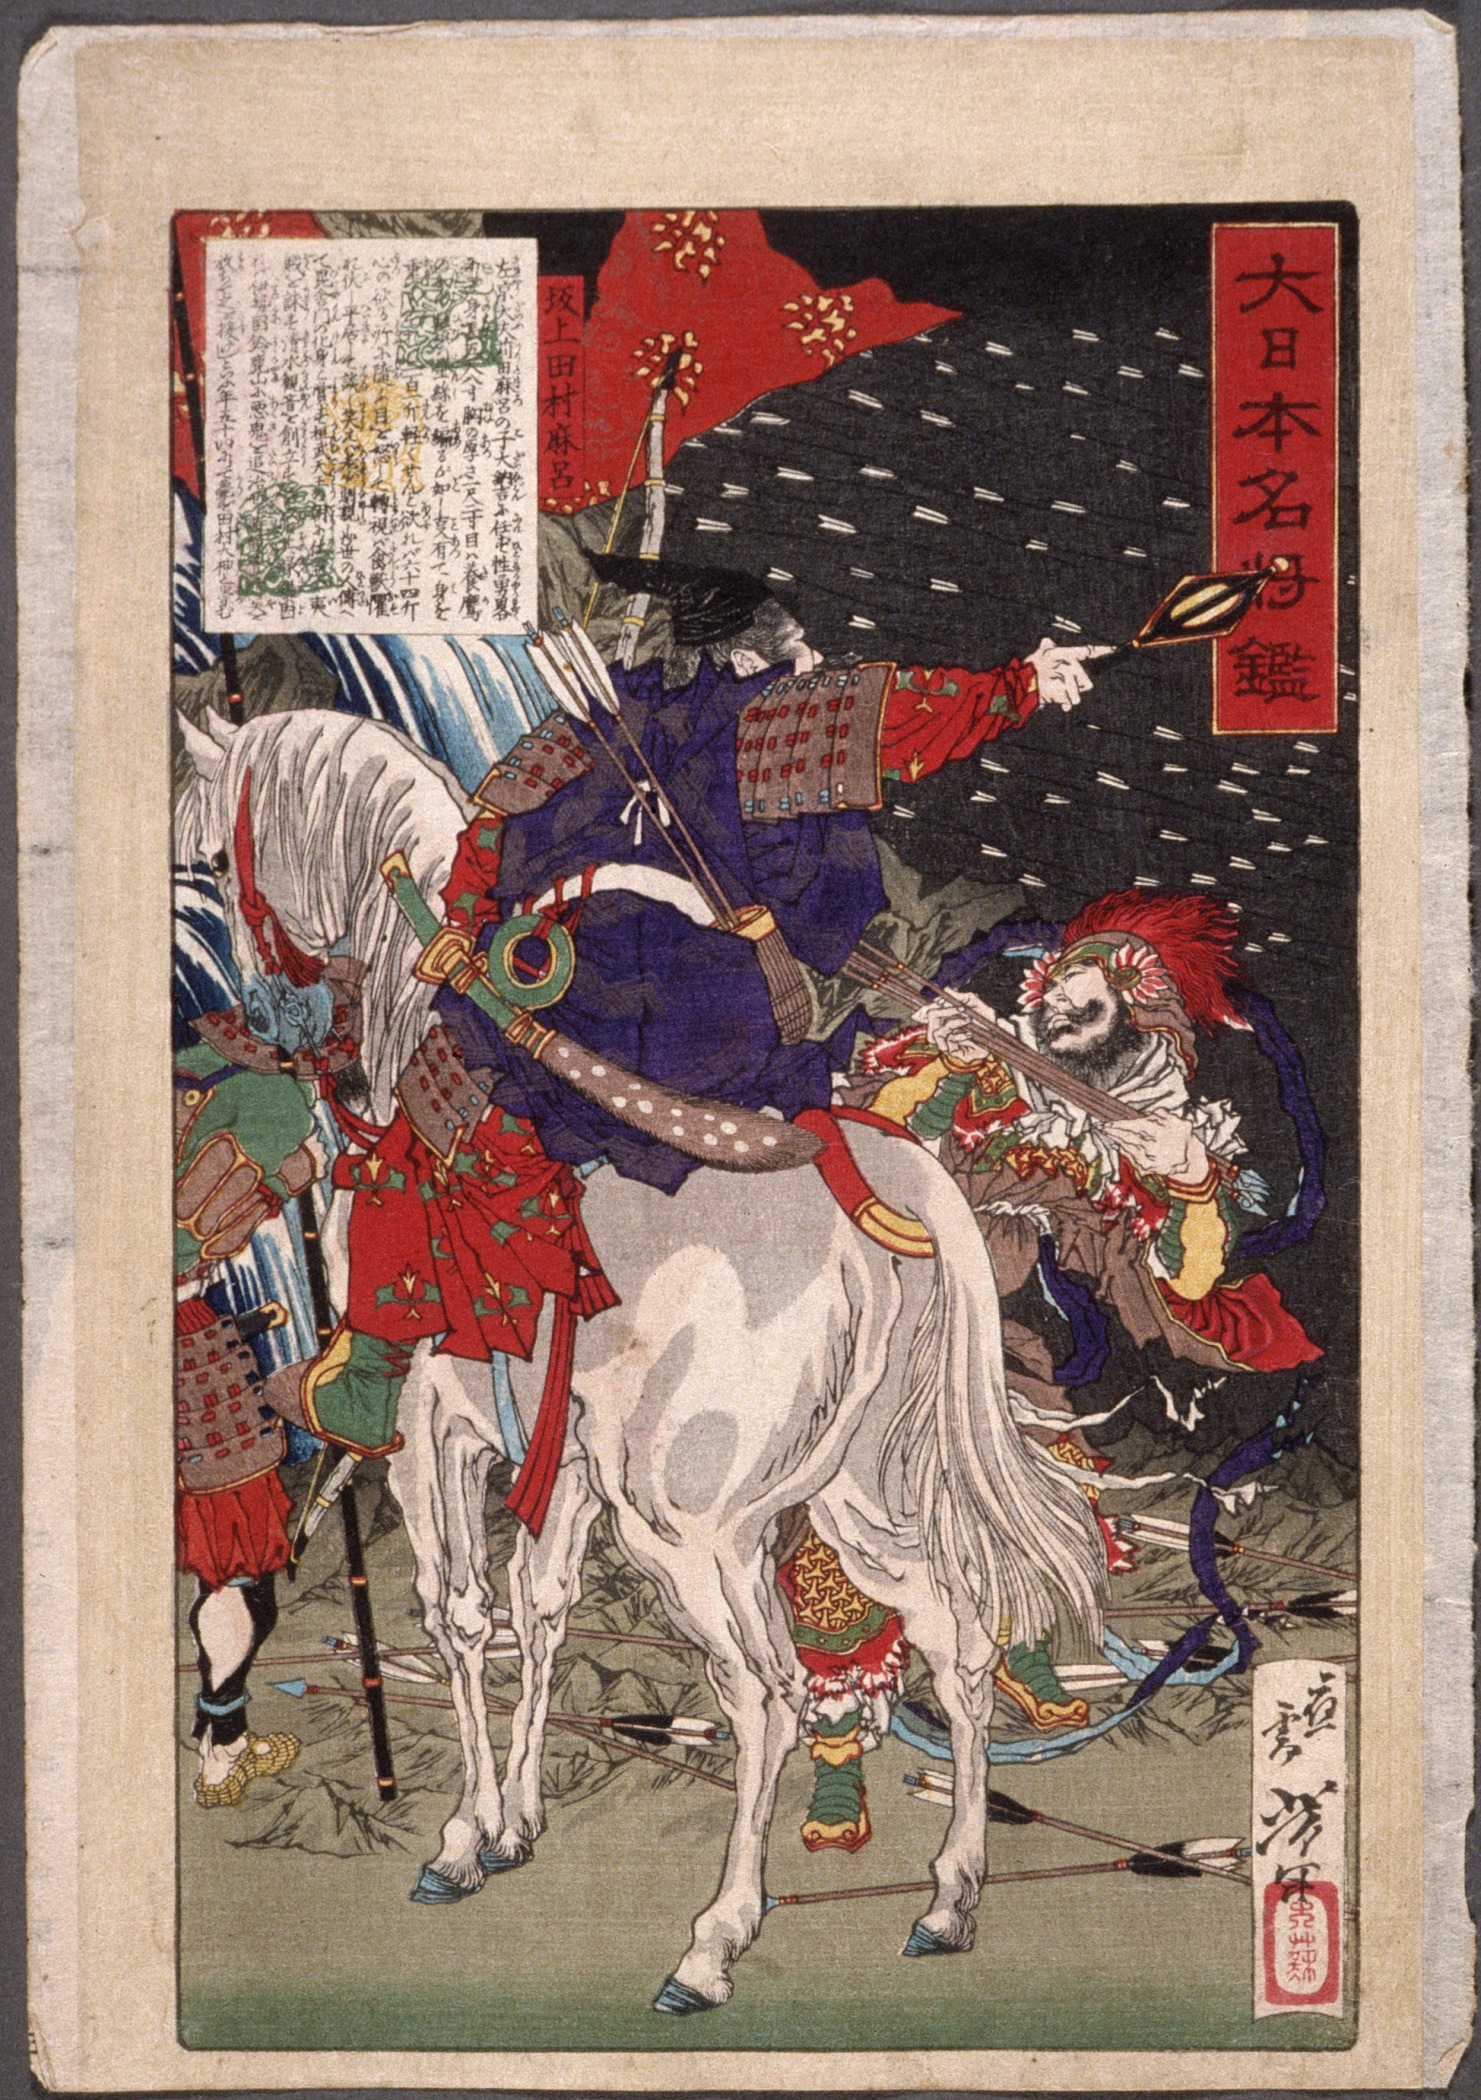 Sakanoue Tamuramaro in Rain of Arrows by Tsukioka Yoshitoshi - 1876 - 32 x 20.6 cm LACMA, Los Angeles County Museum of Art